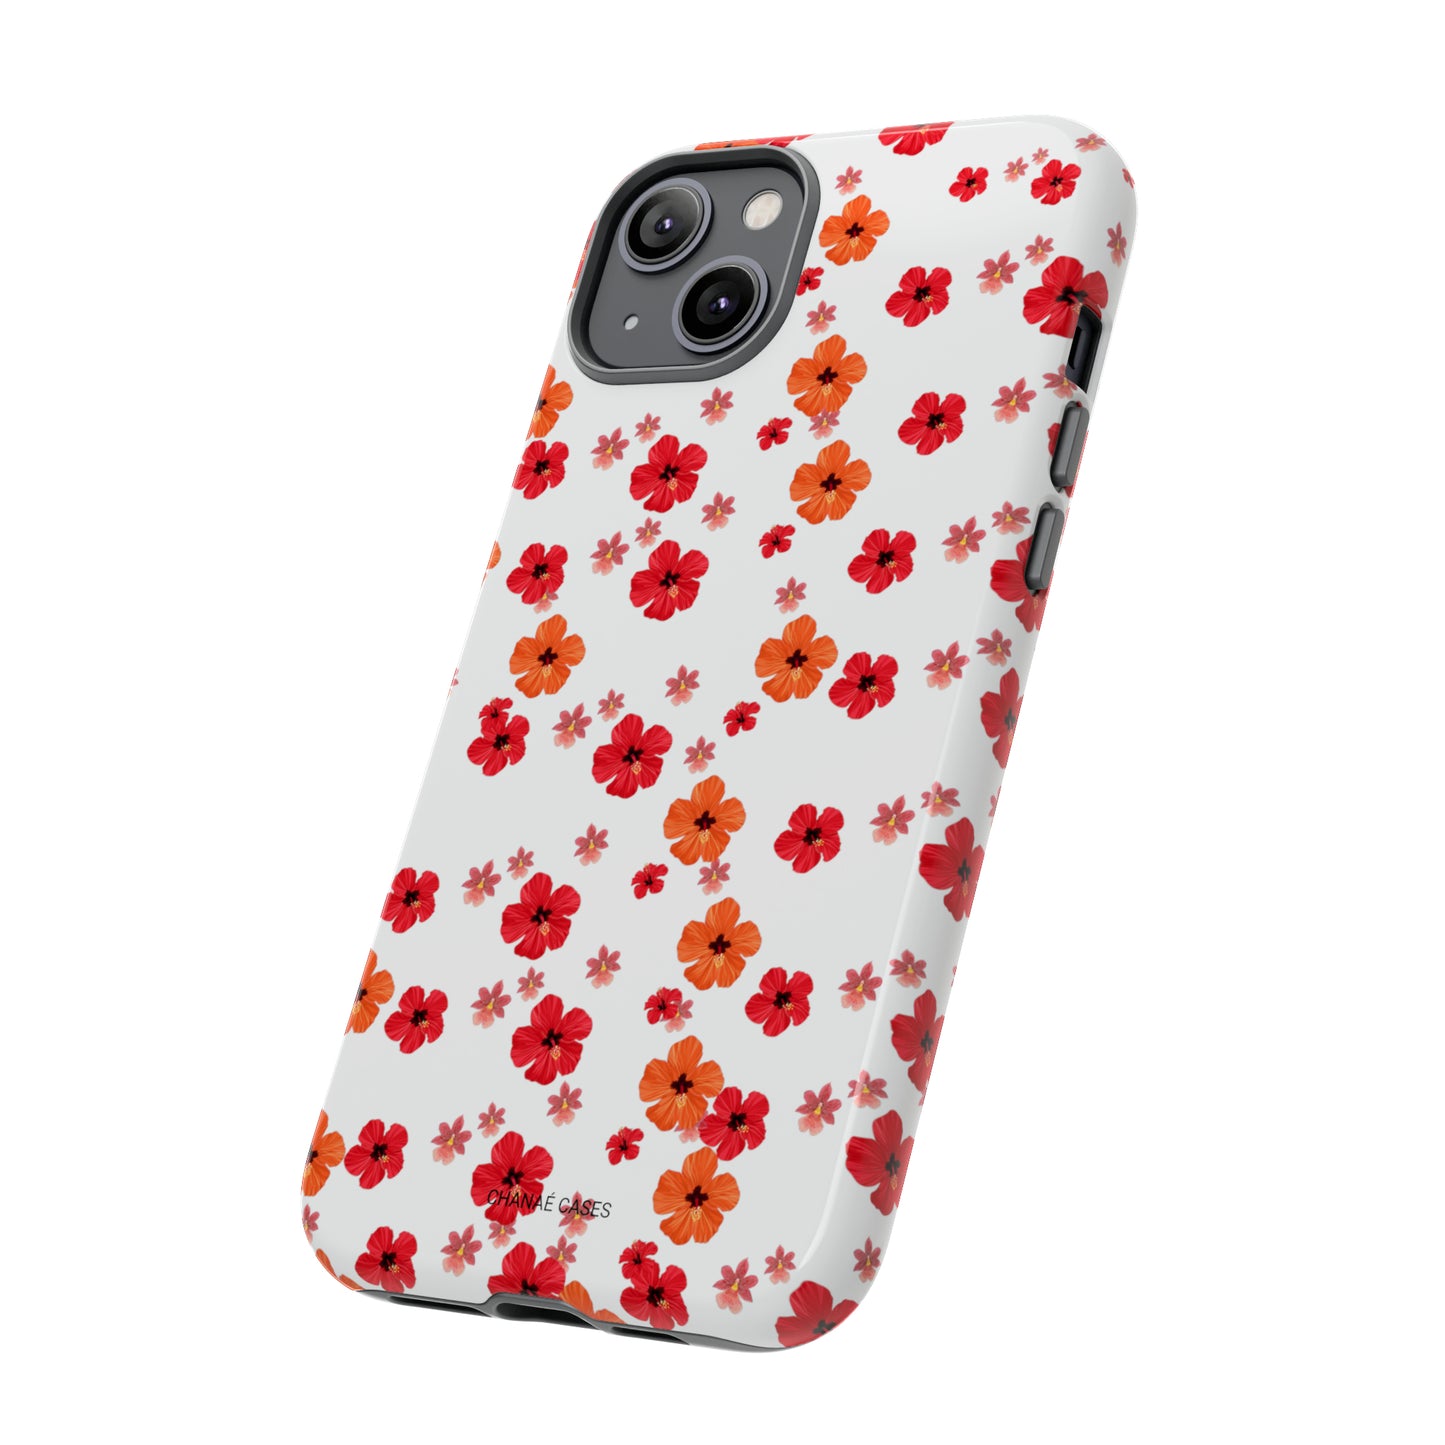 Raining Flowers iPhone "Tough" Case (White)